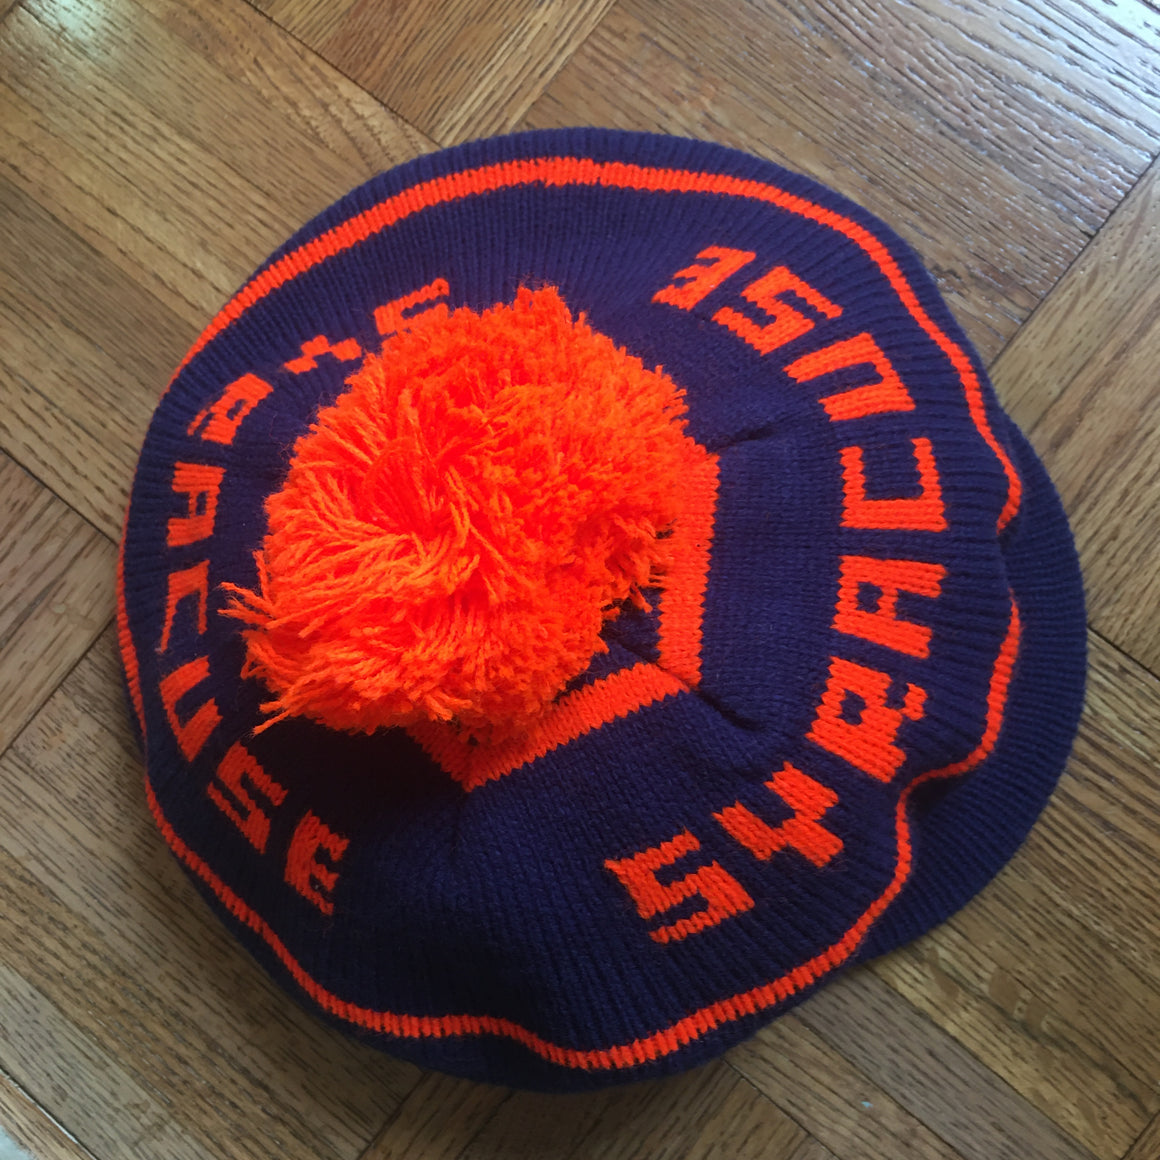 Syracuse Orange hat